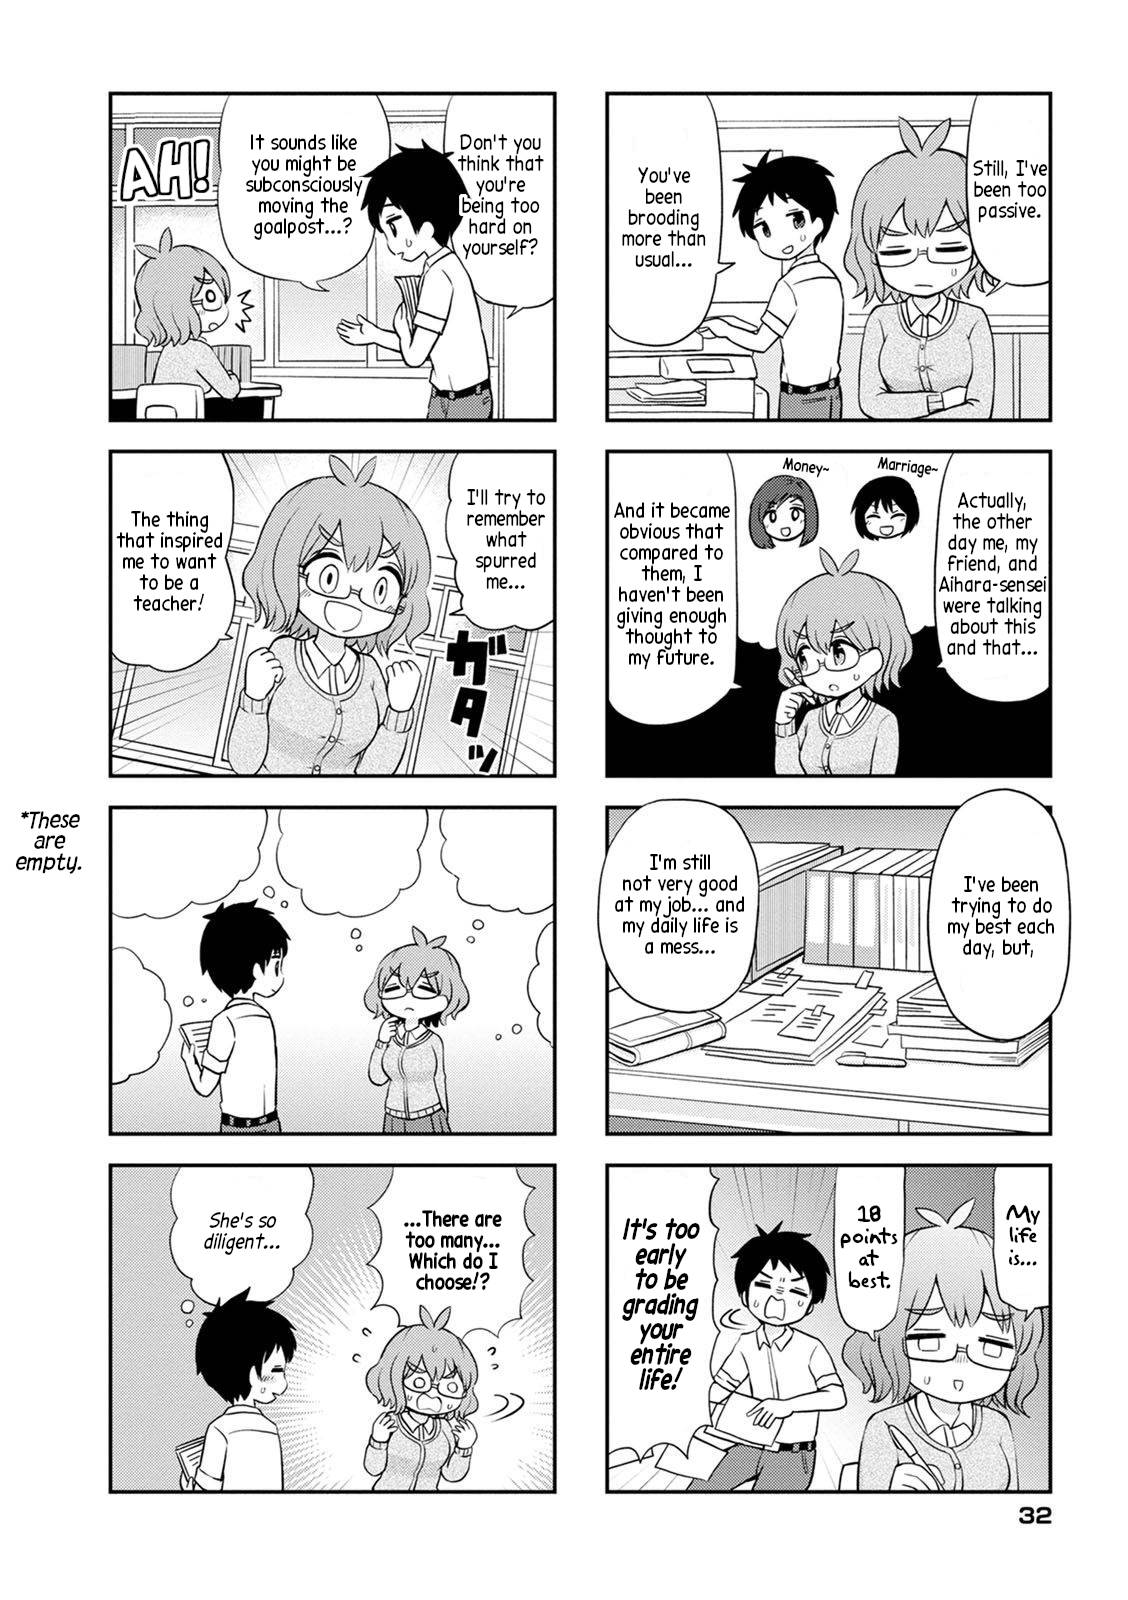 Maru-Sensei's ** Is Cute. - chapter 4 - #4